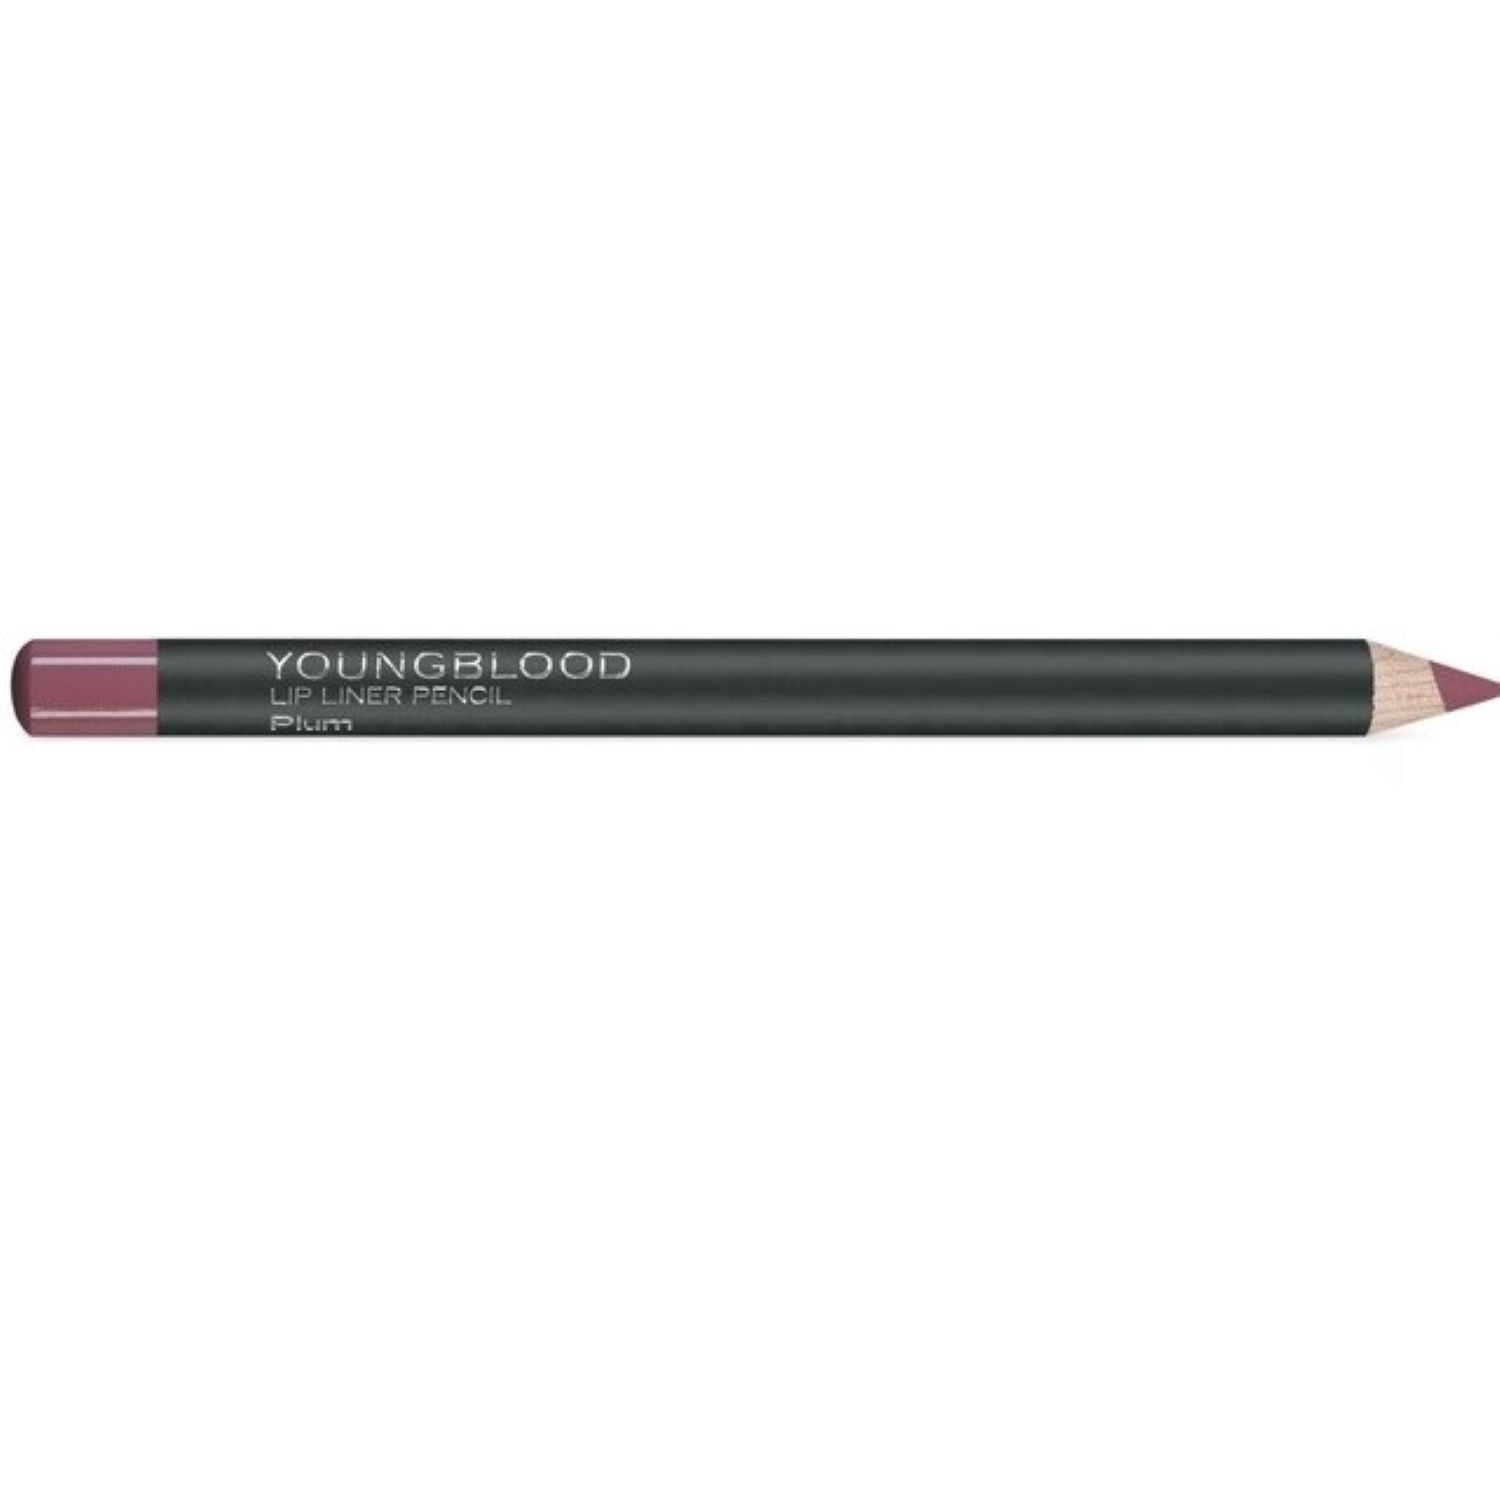 Youngblood Lip Liner Pencil / PLUM